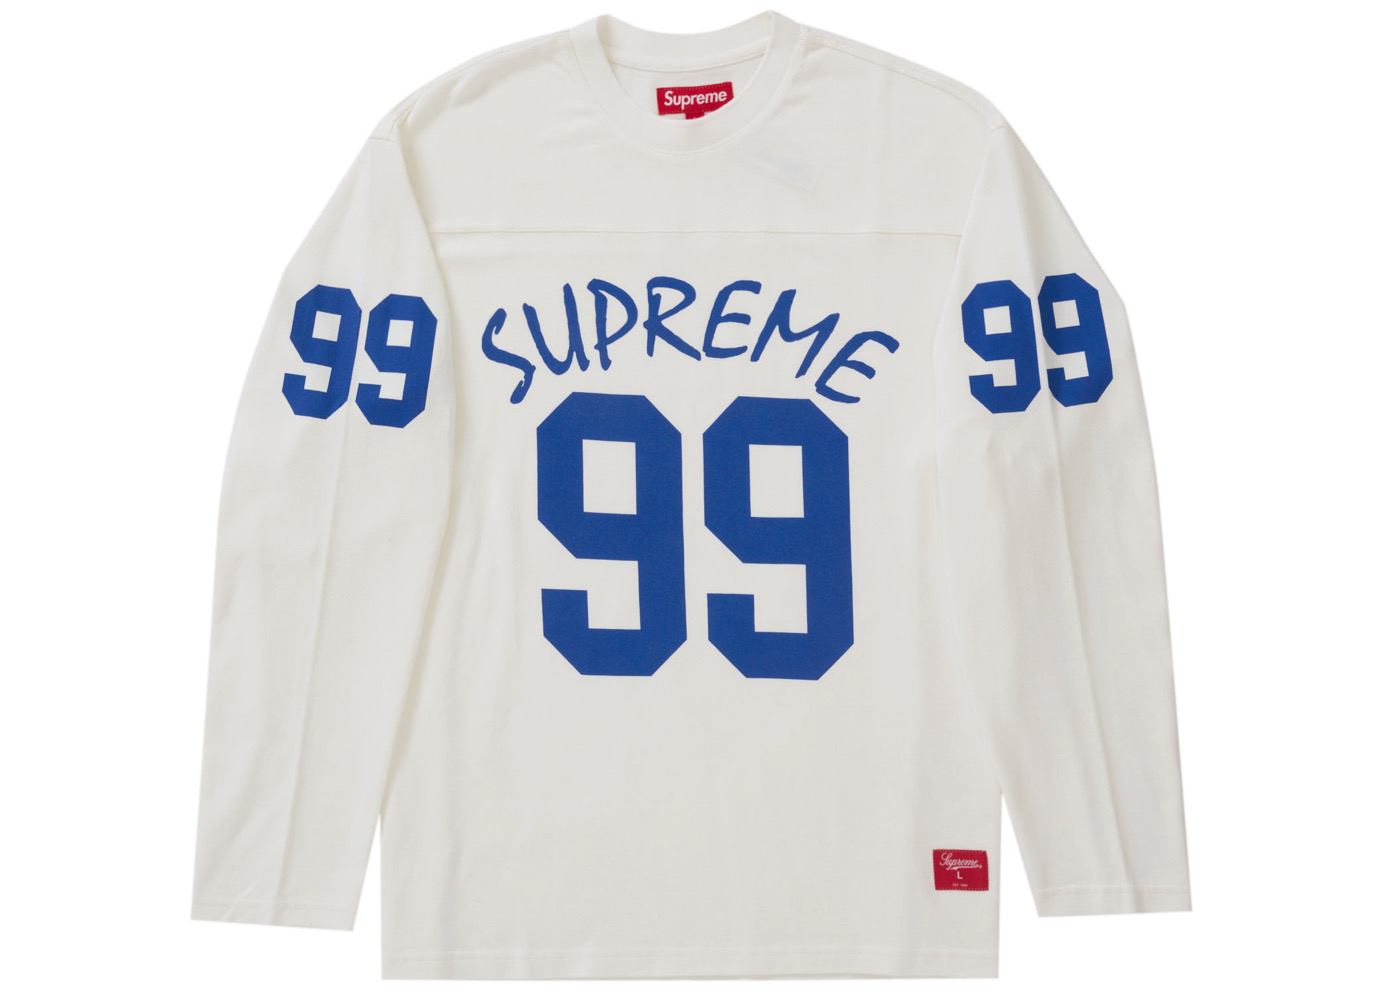 Supreme 99 L/S Football Top White Men's - SS24 - US